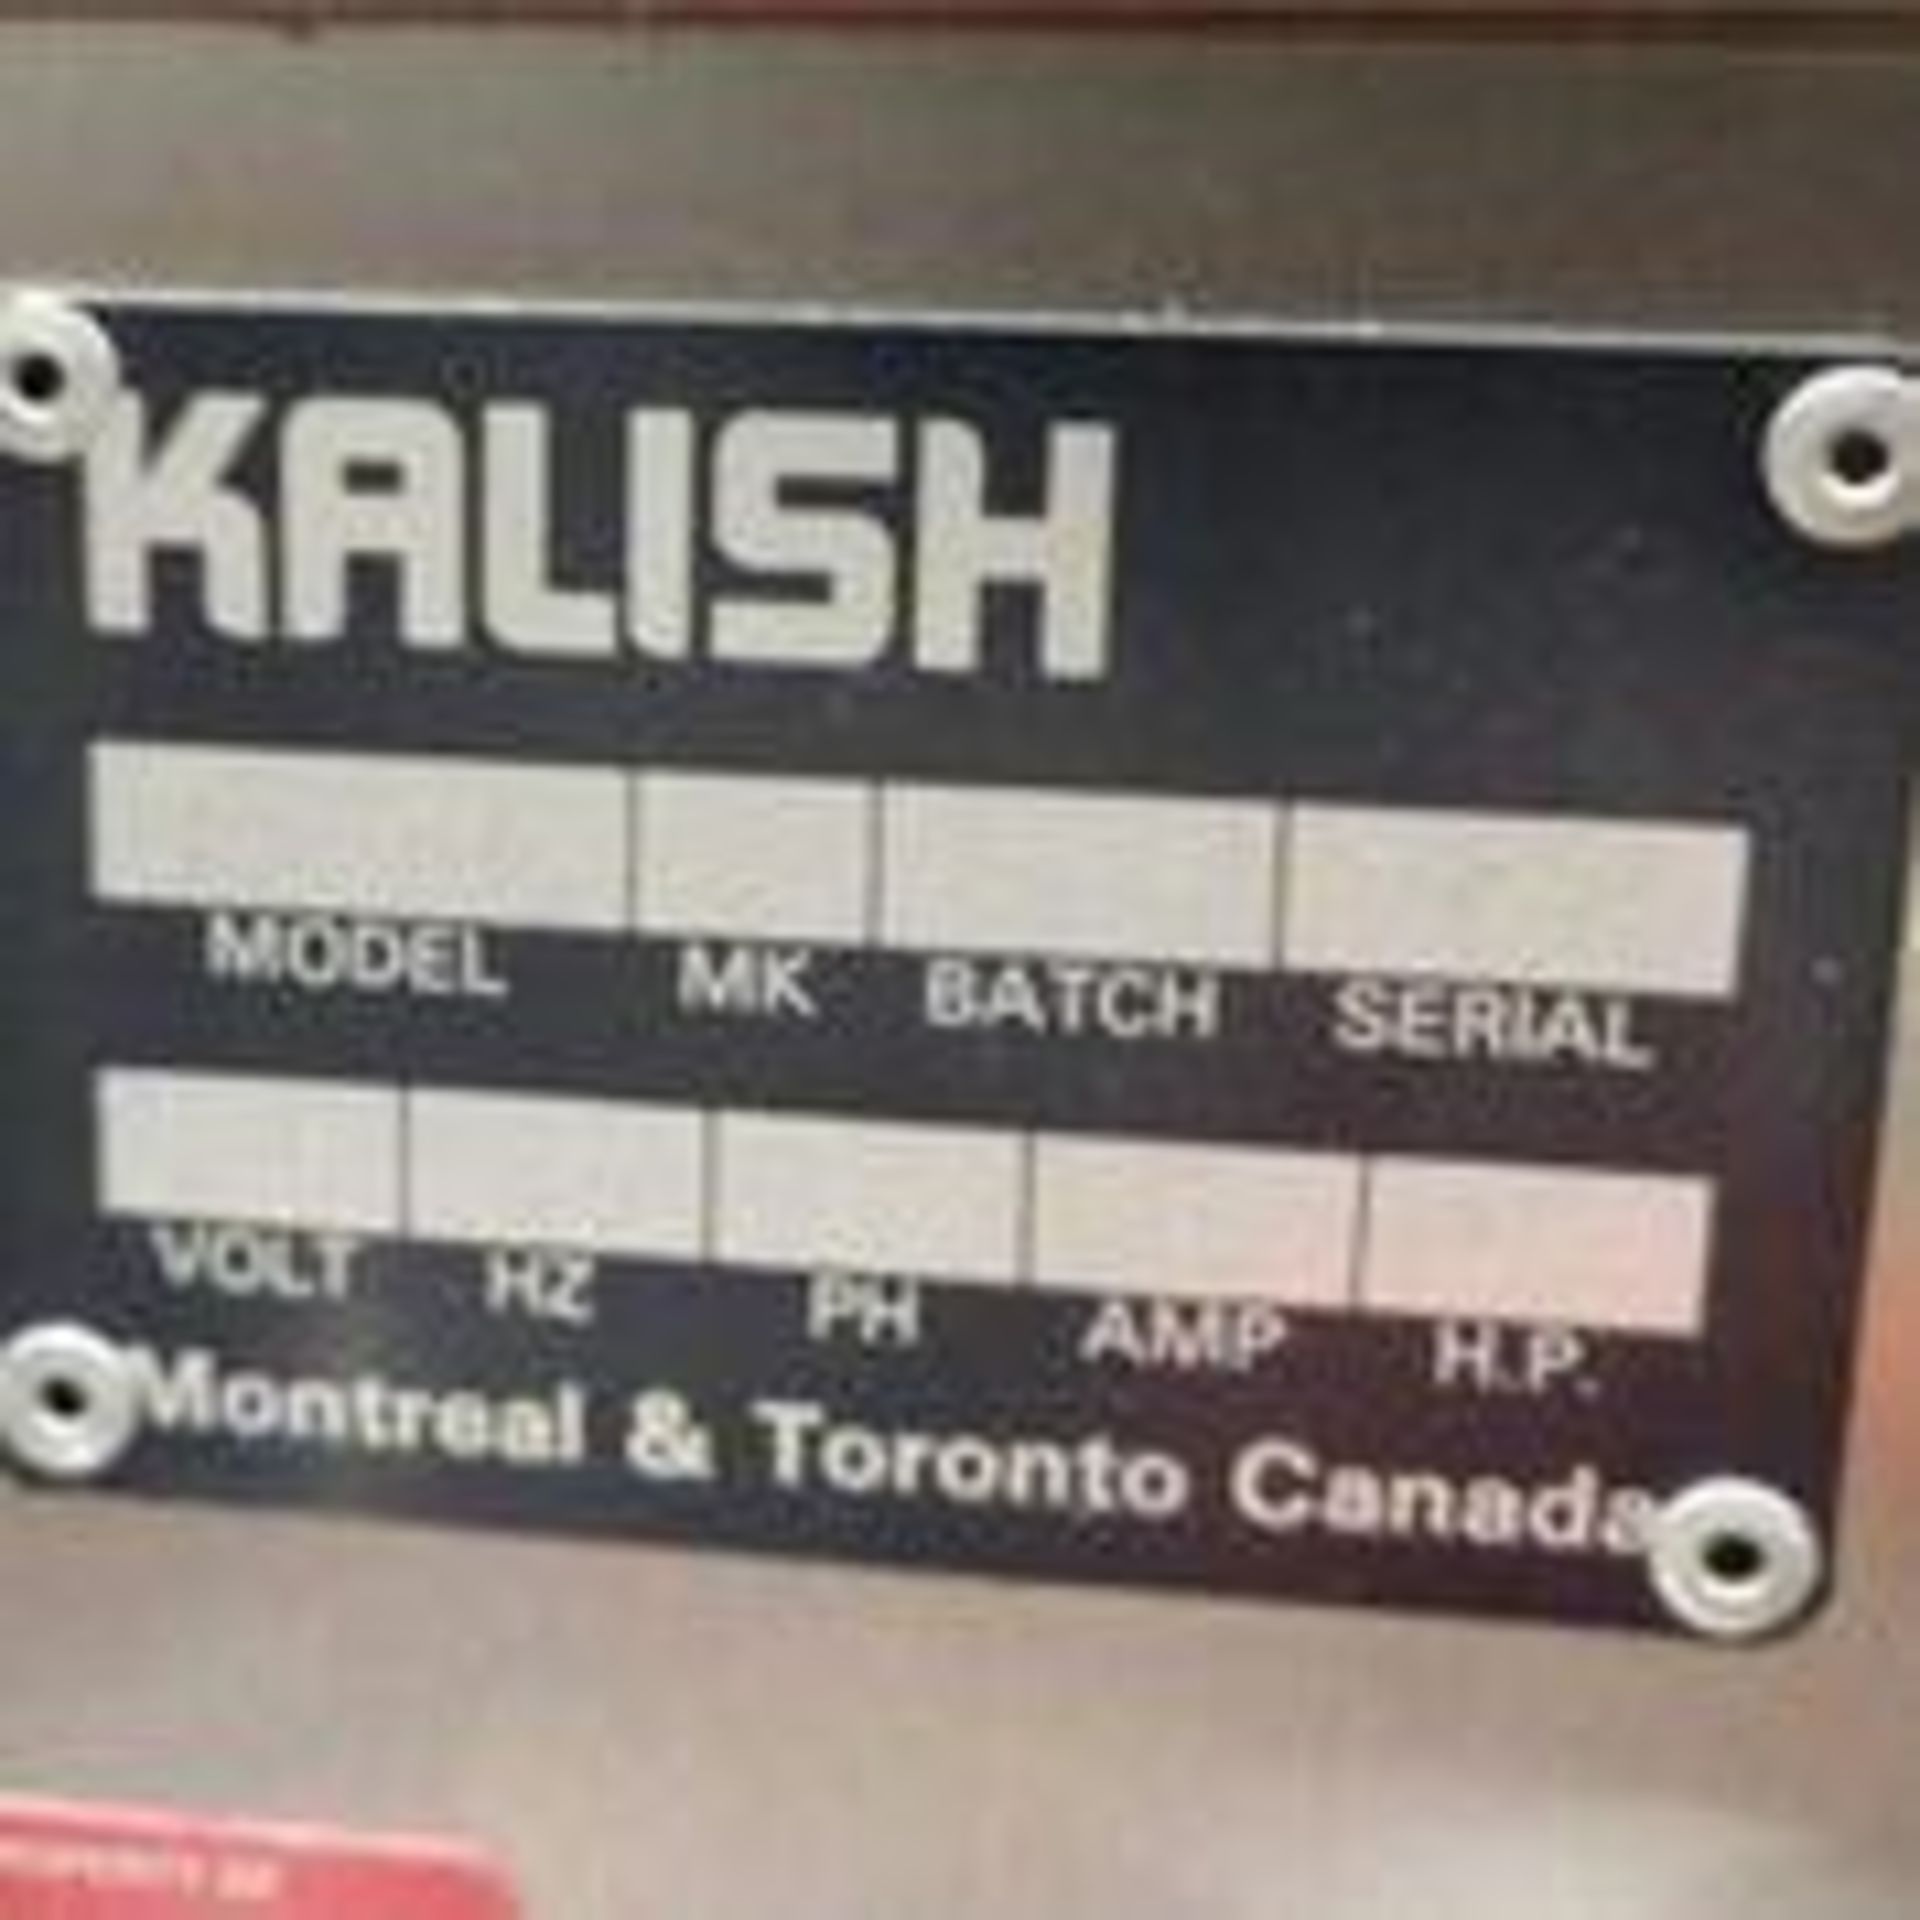 Kalish Model 92000 Semi Automatic Rotary Retorquer - Image 3 of 3